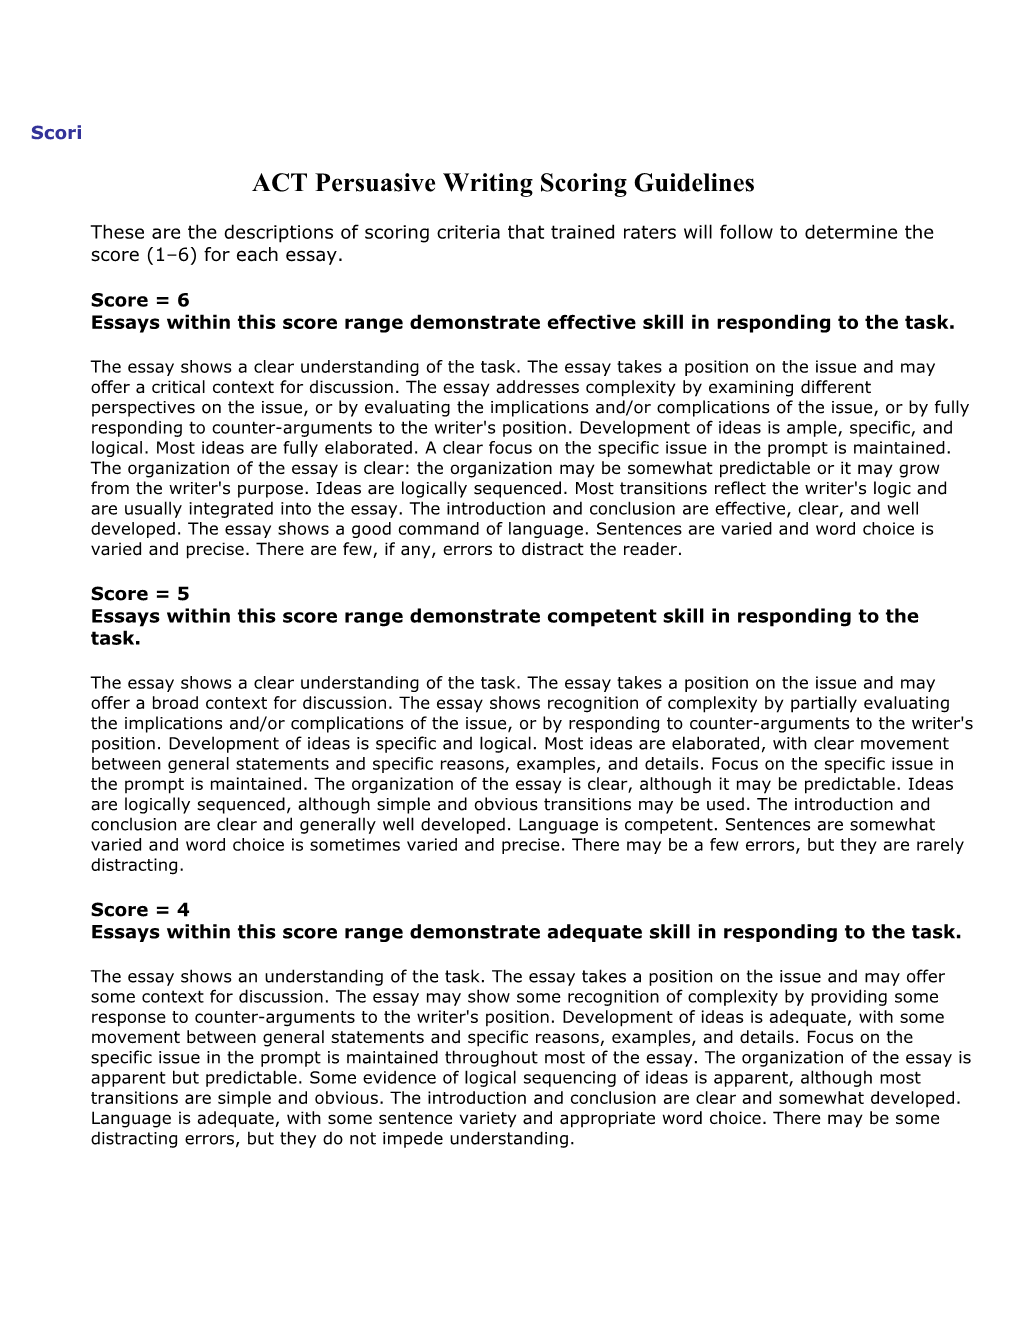 ACT Persuasive Writing Scoring Guidelines